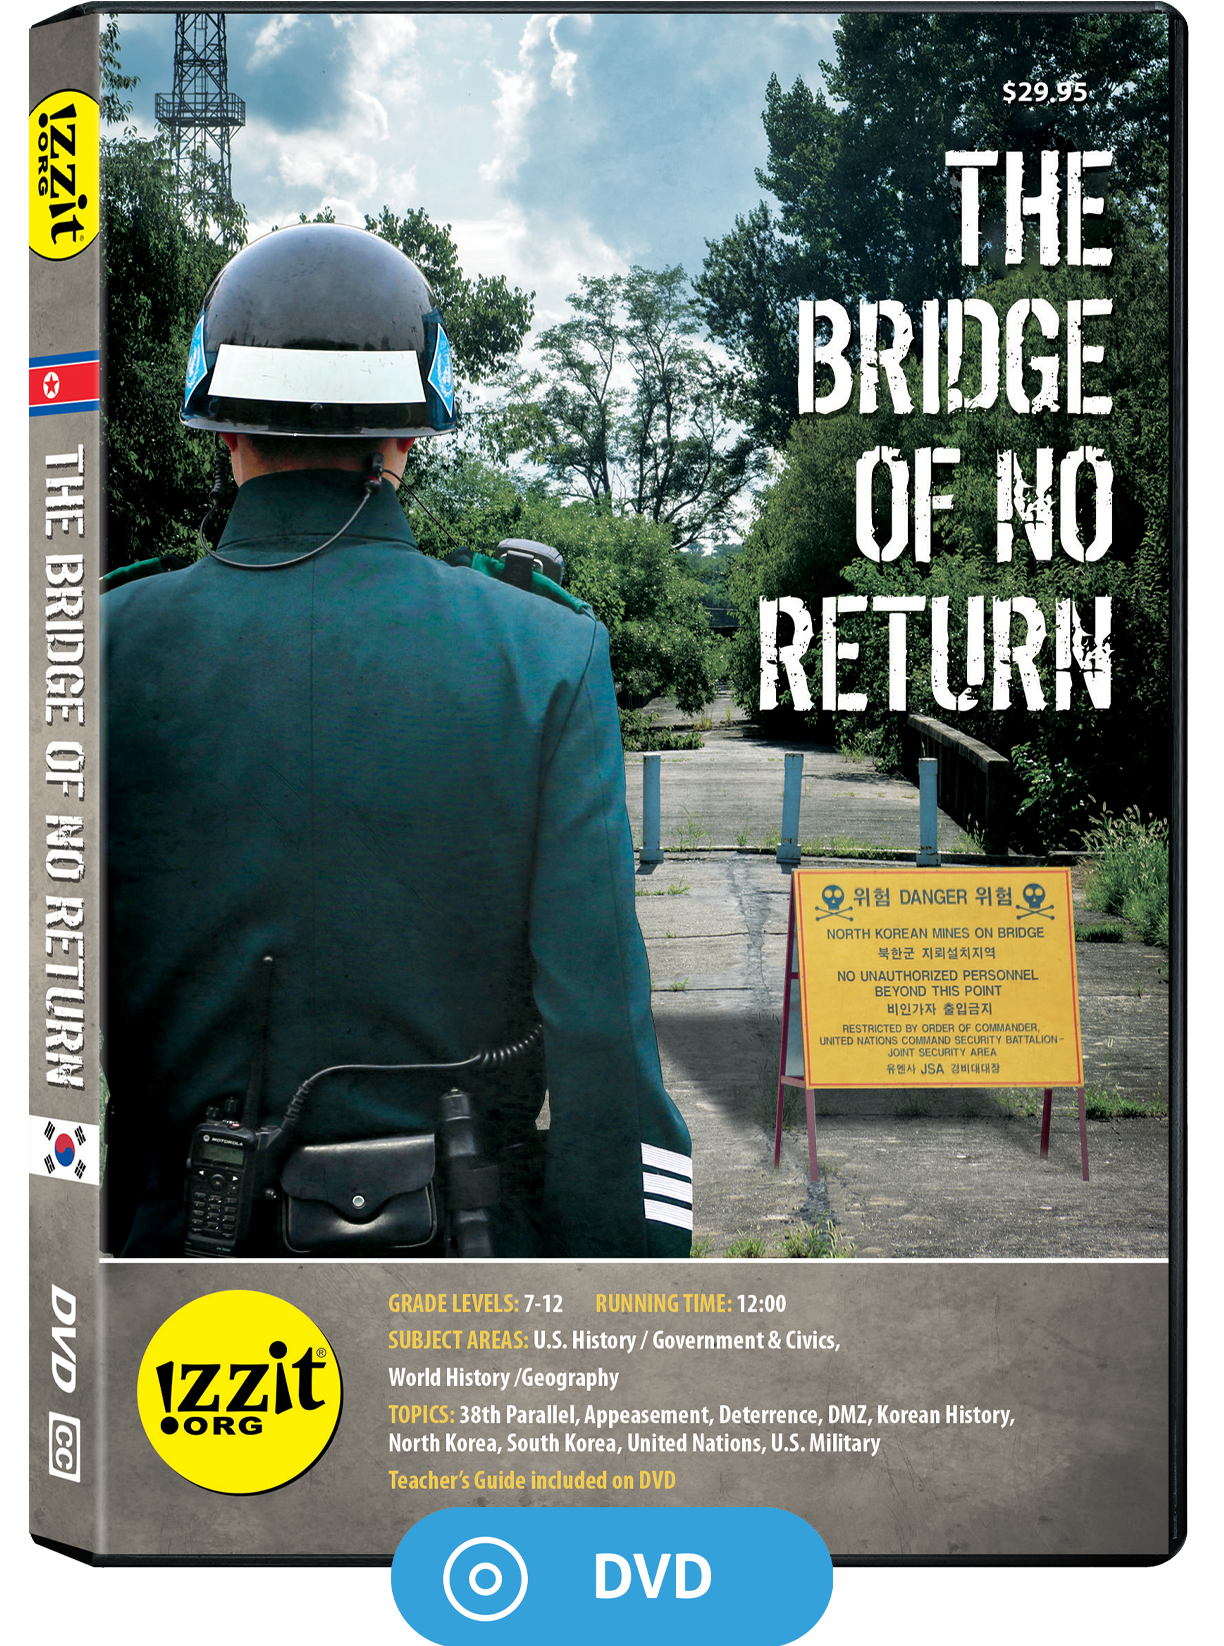 The Bridge of No Return DVD